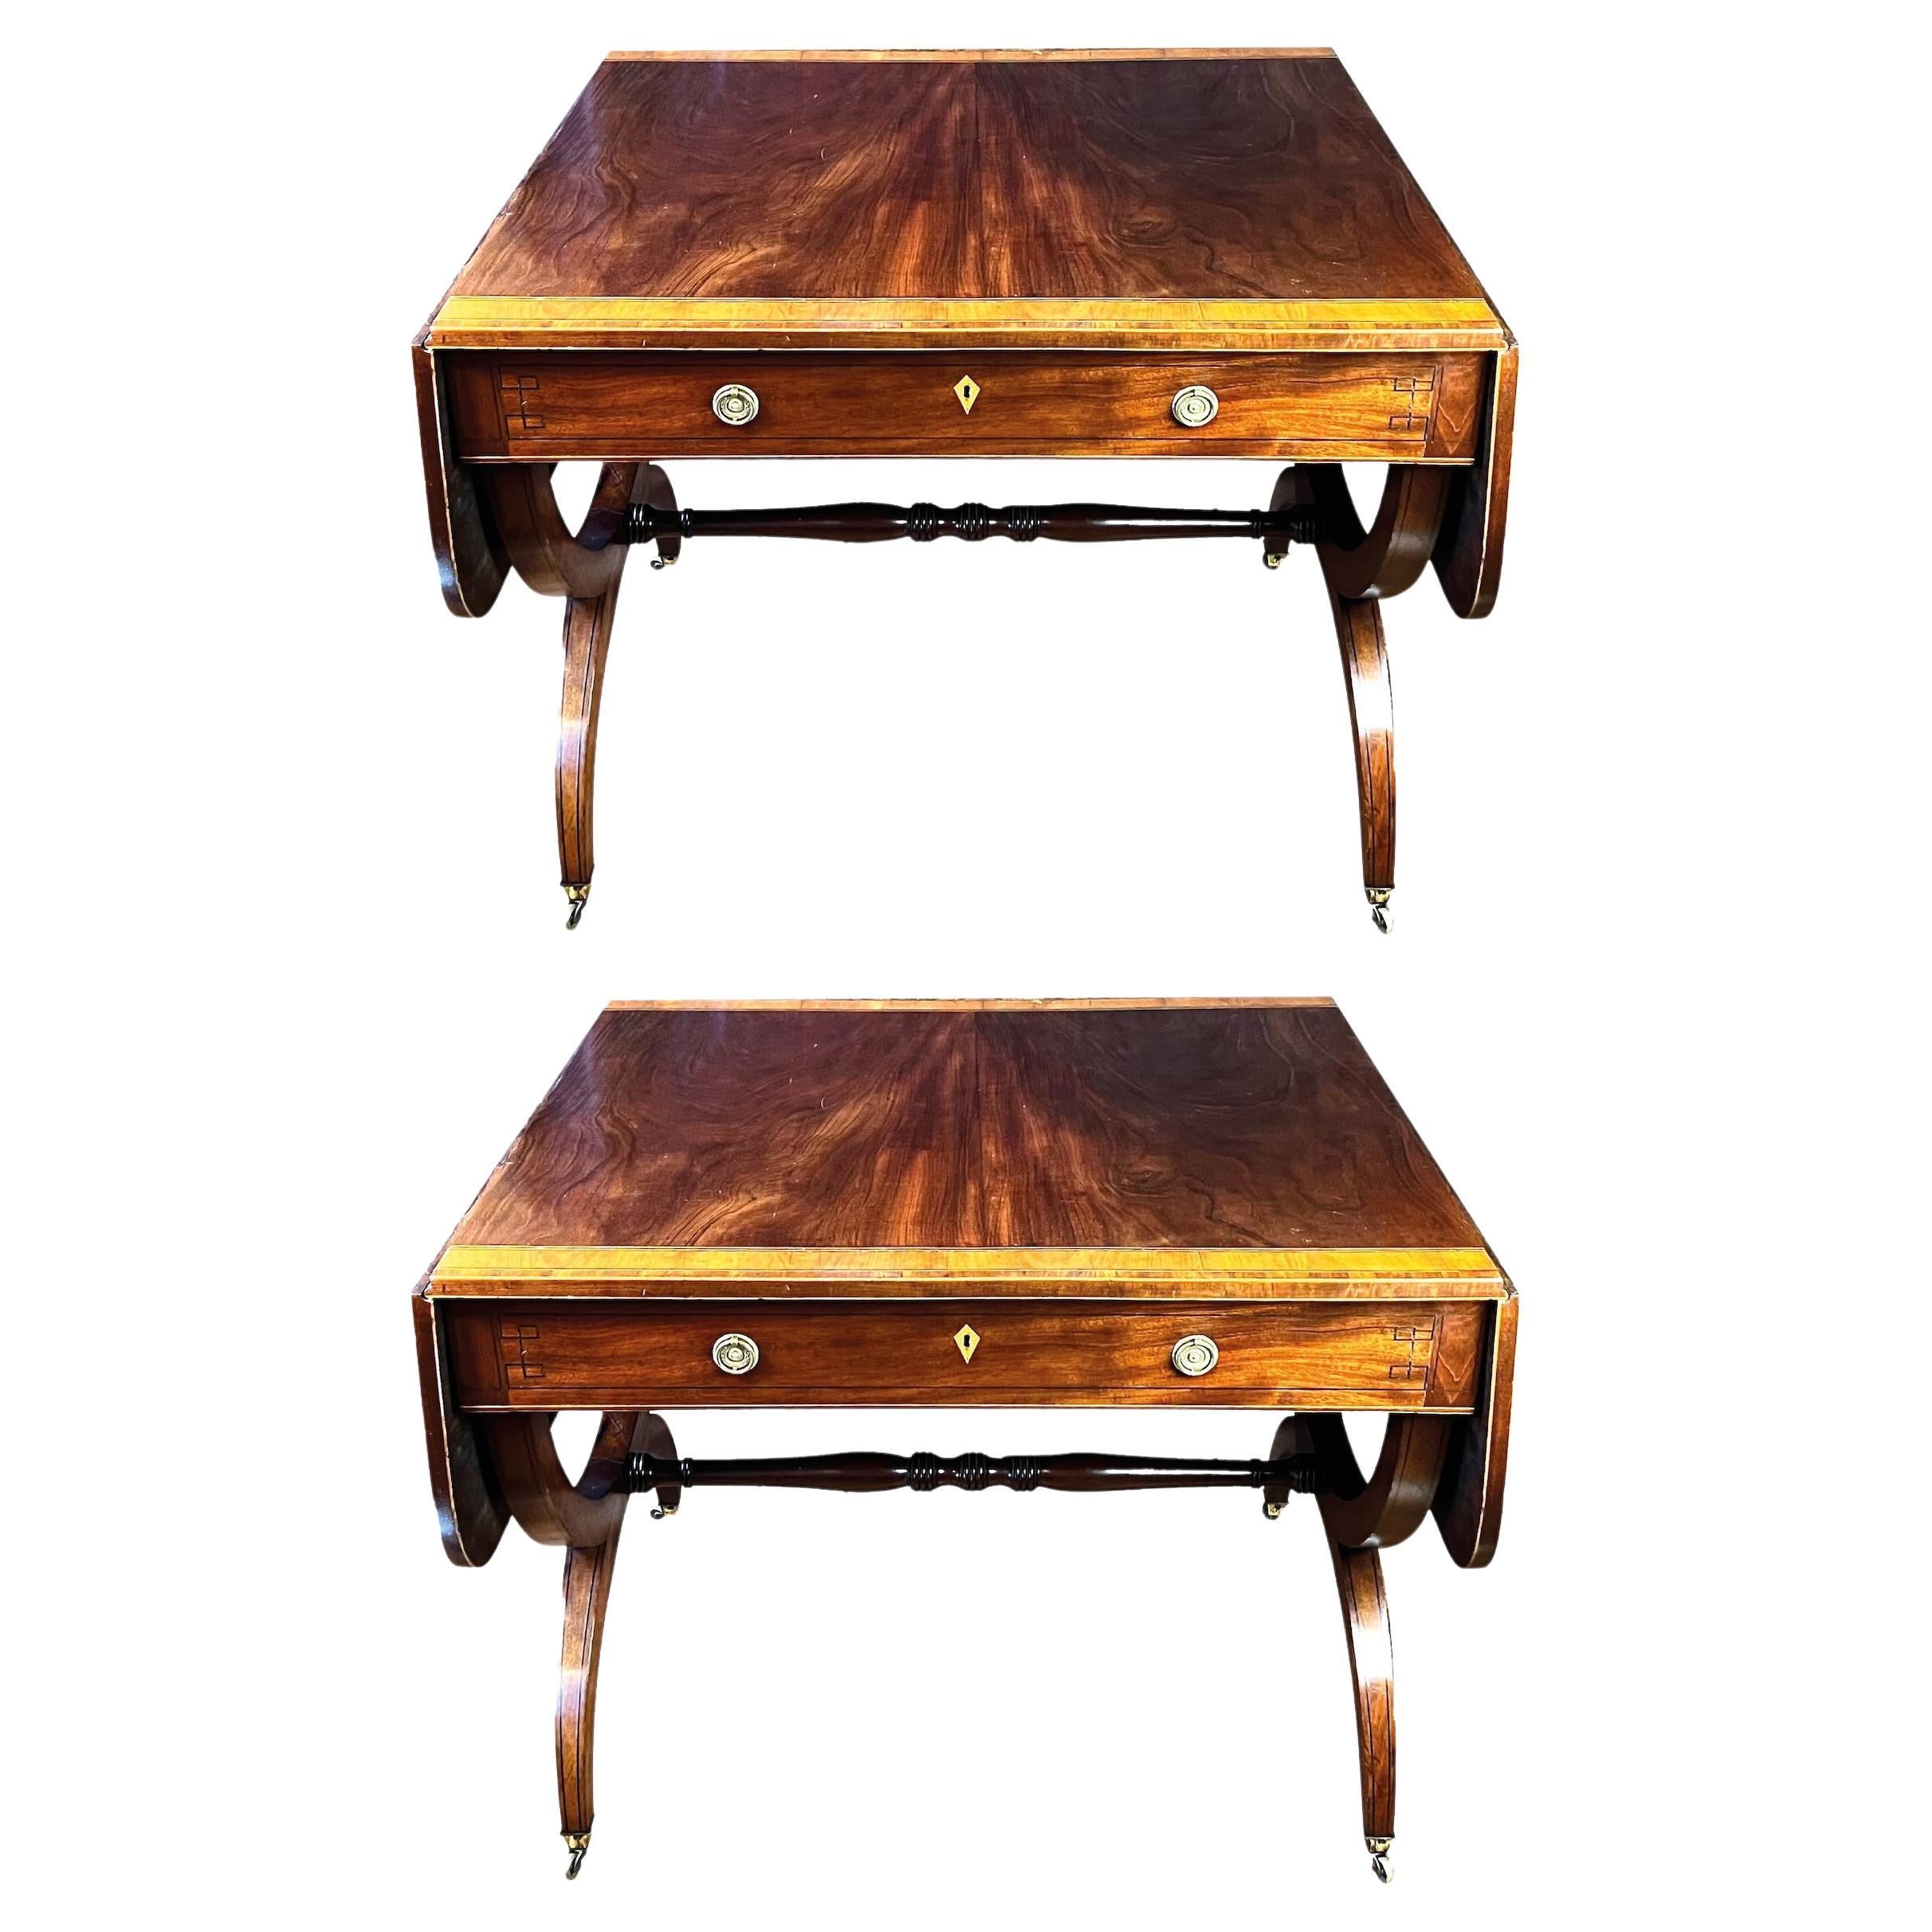 A Fine Pair Of Regency Mahogany & Satinwood-Inlaid Sofa Tables